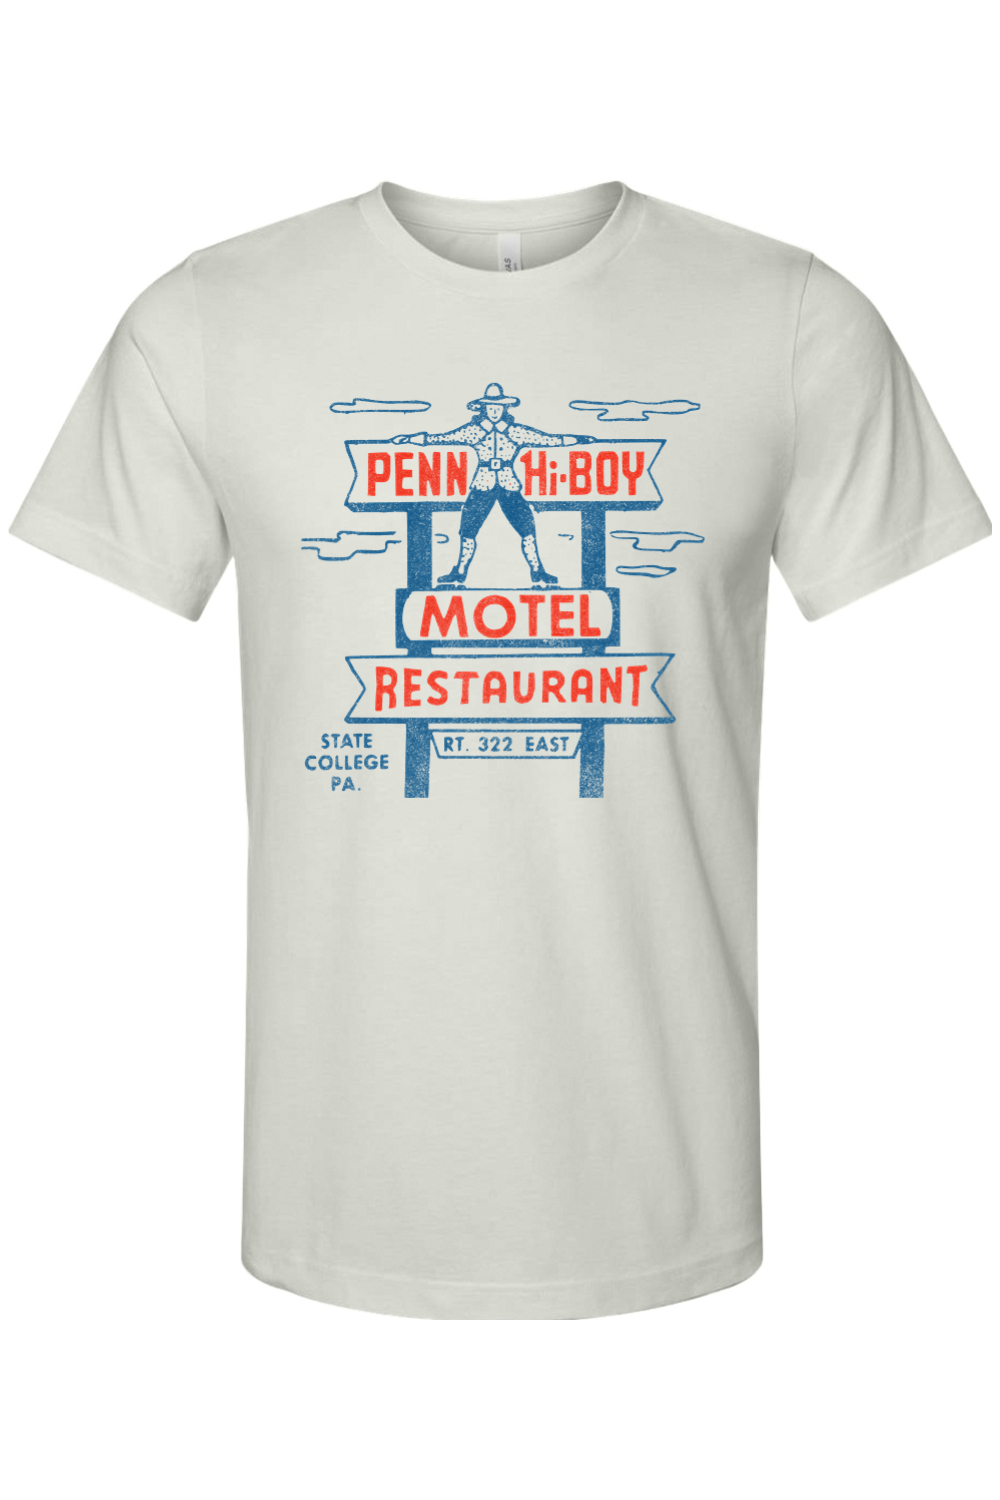 Penn Hi-Boy Motel & Restaurant - State College, PA - Yinzylvania